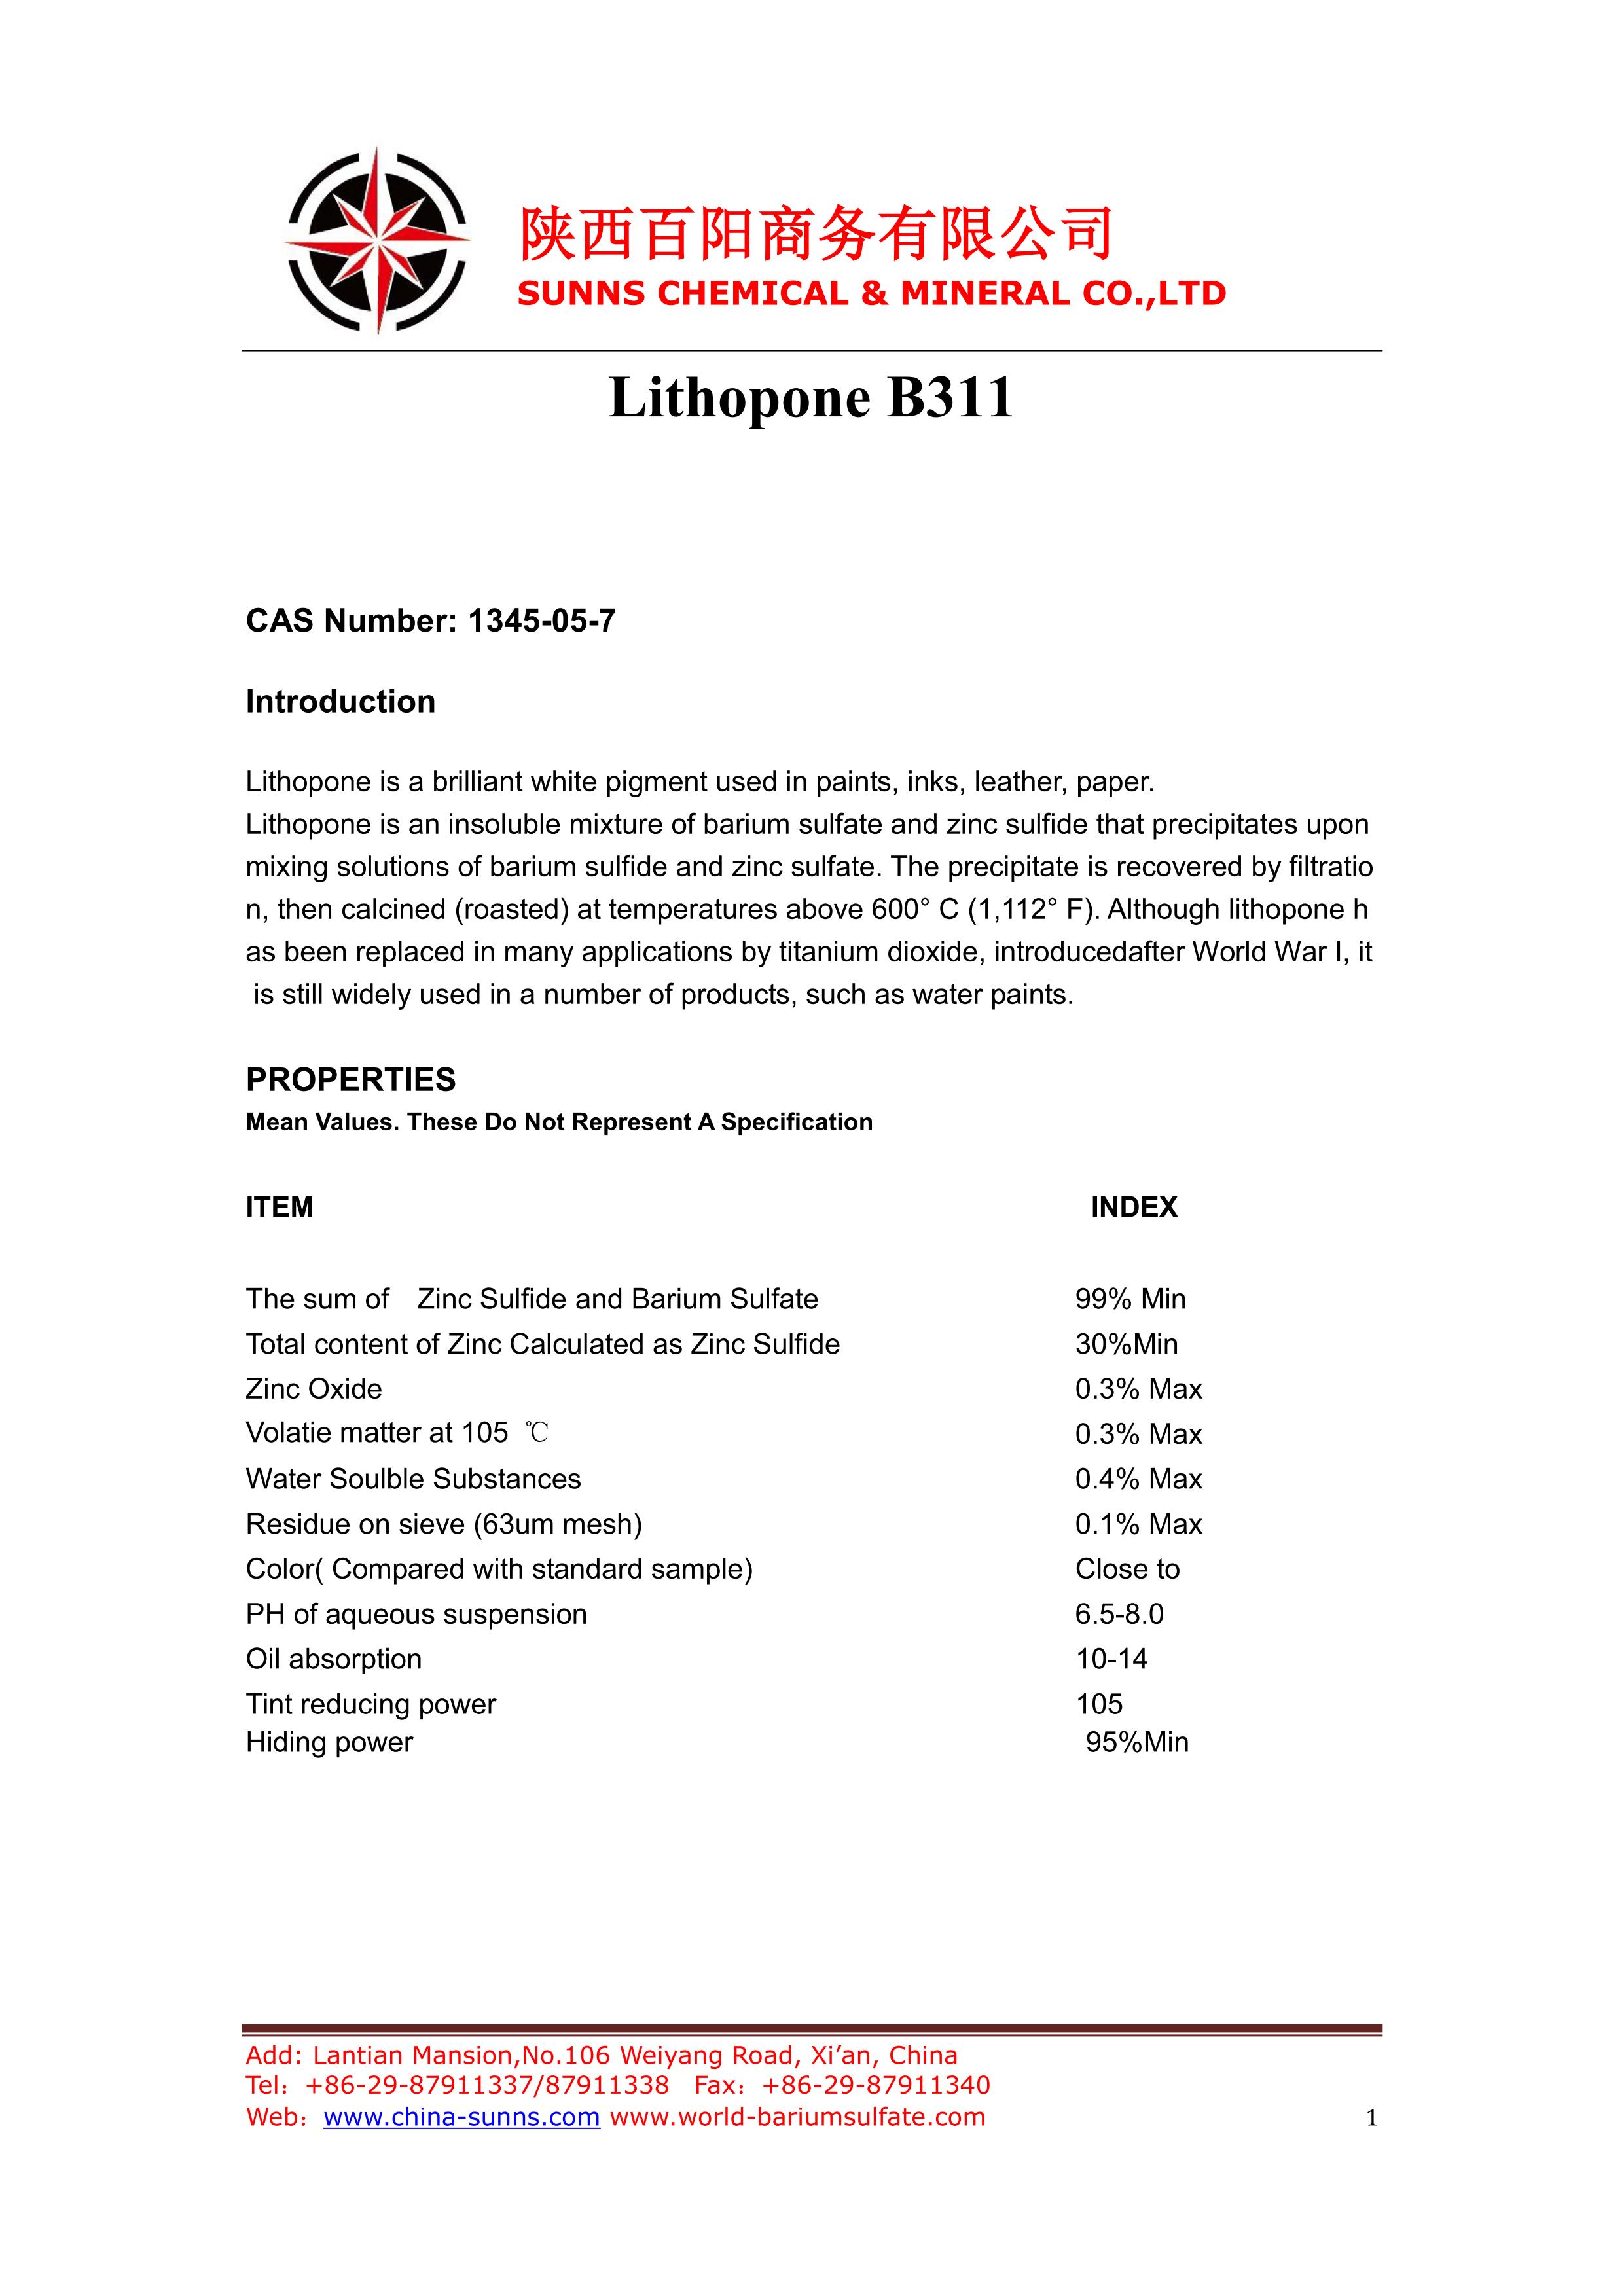 Lithopone B-311